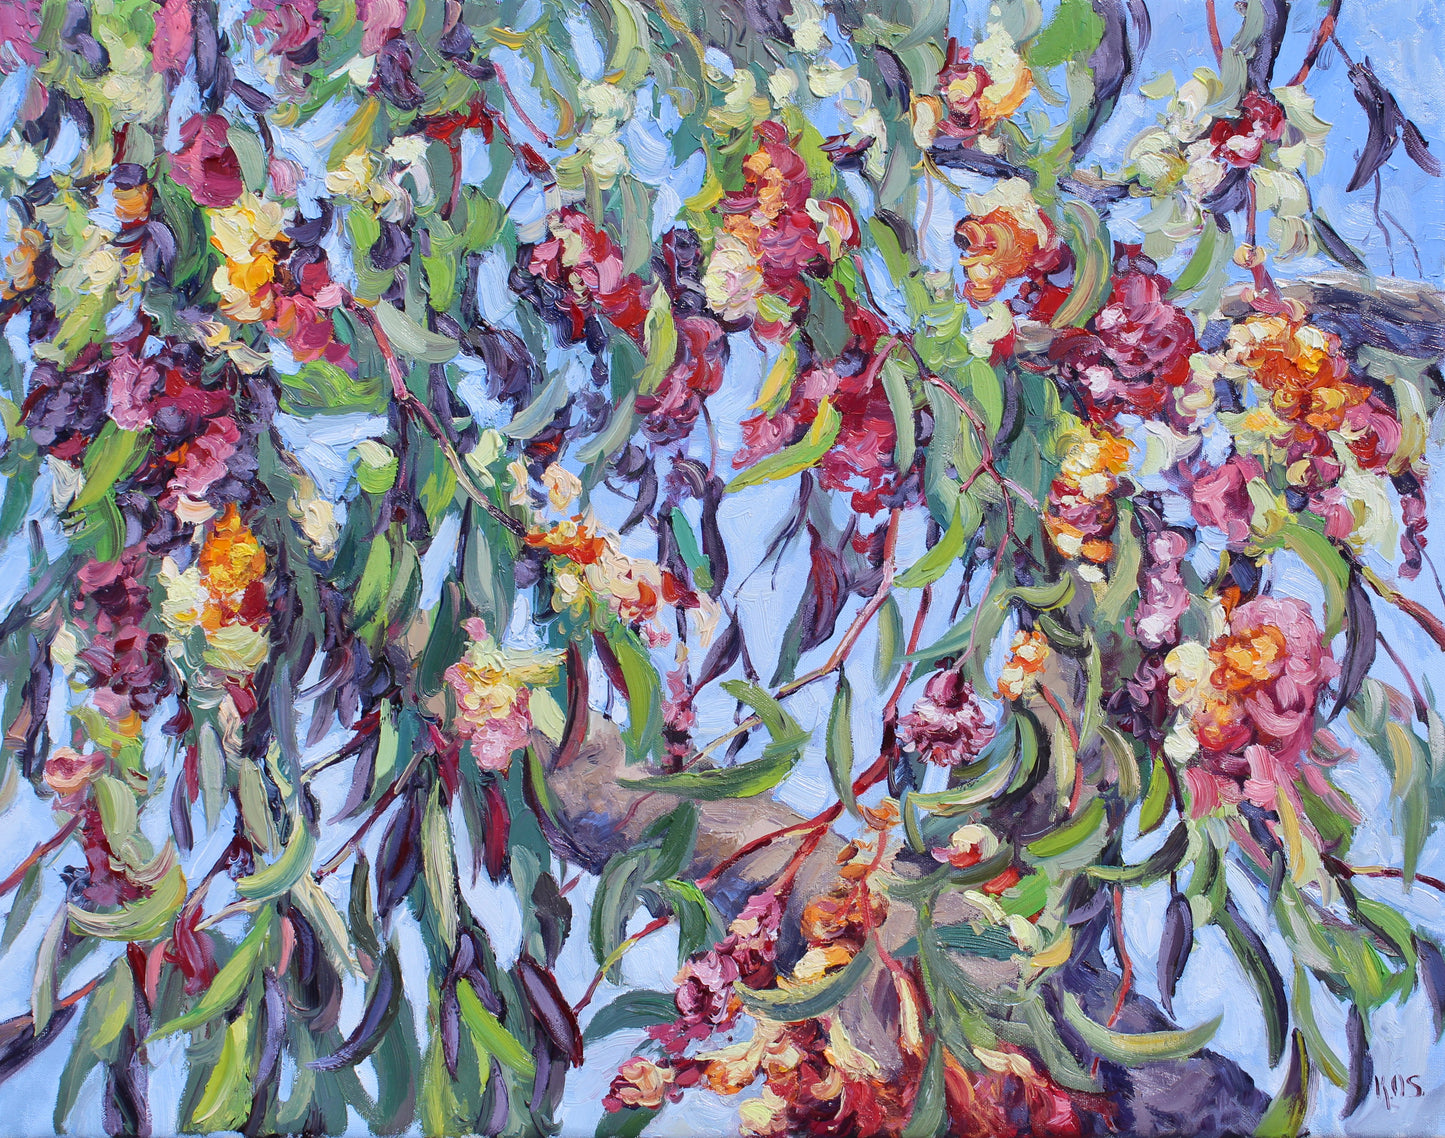 Gum Tree Blossoms, An Original 22" x 28" Eucalyptus Tree Oil Painting On Canvas